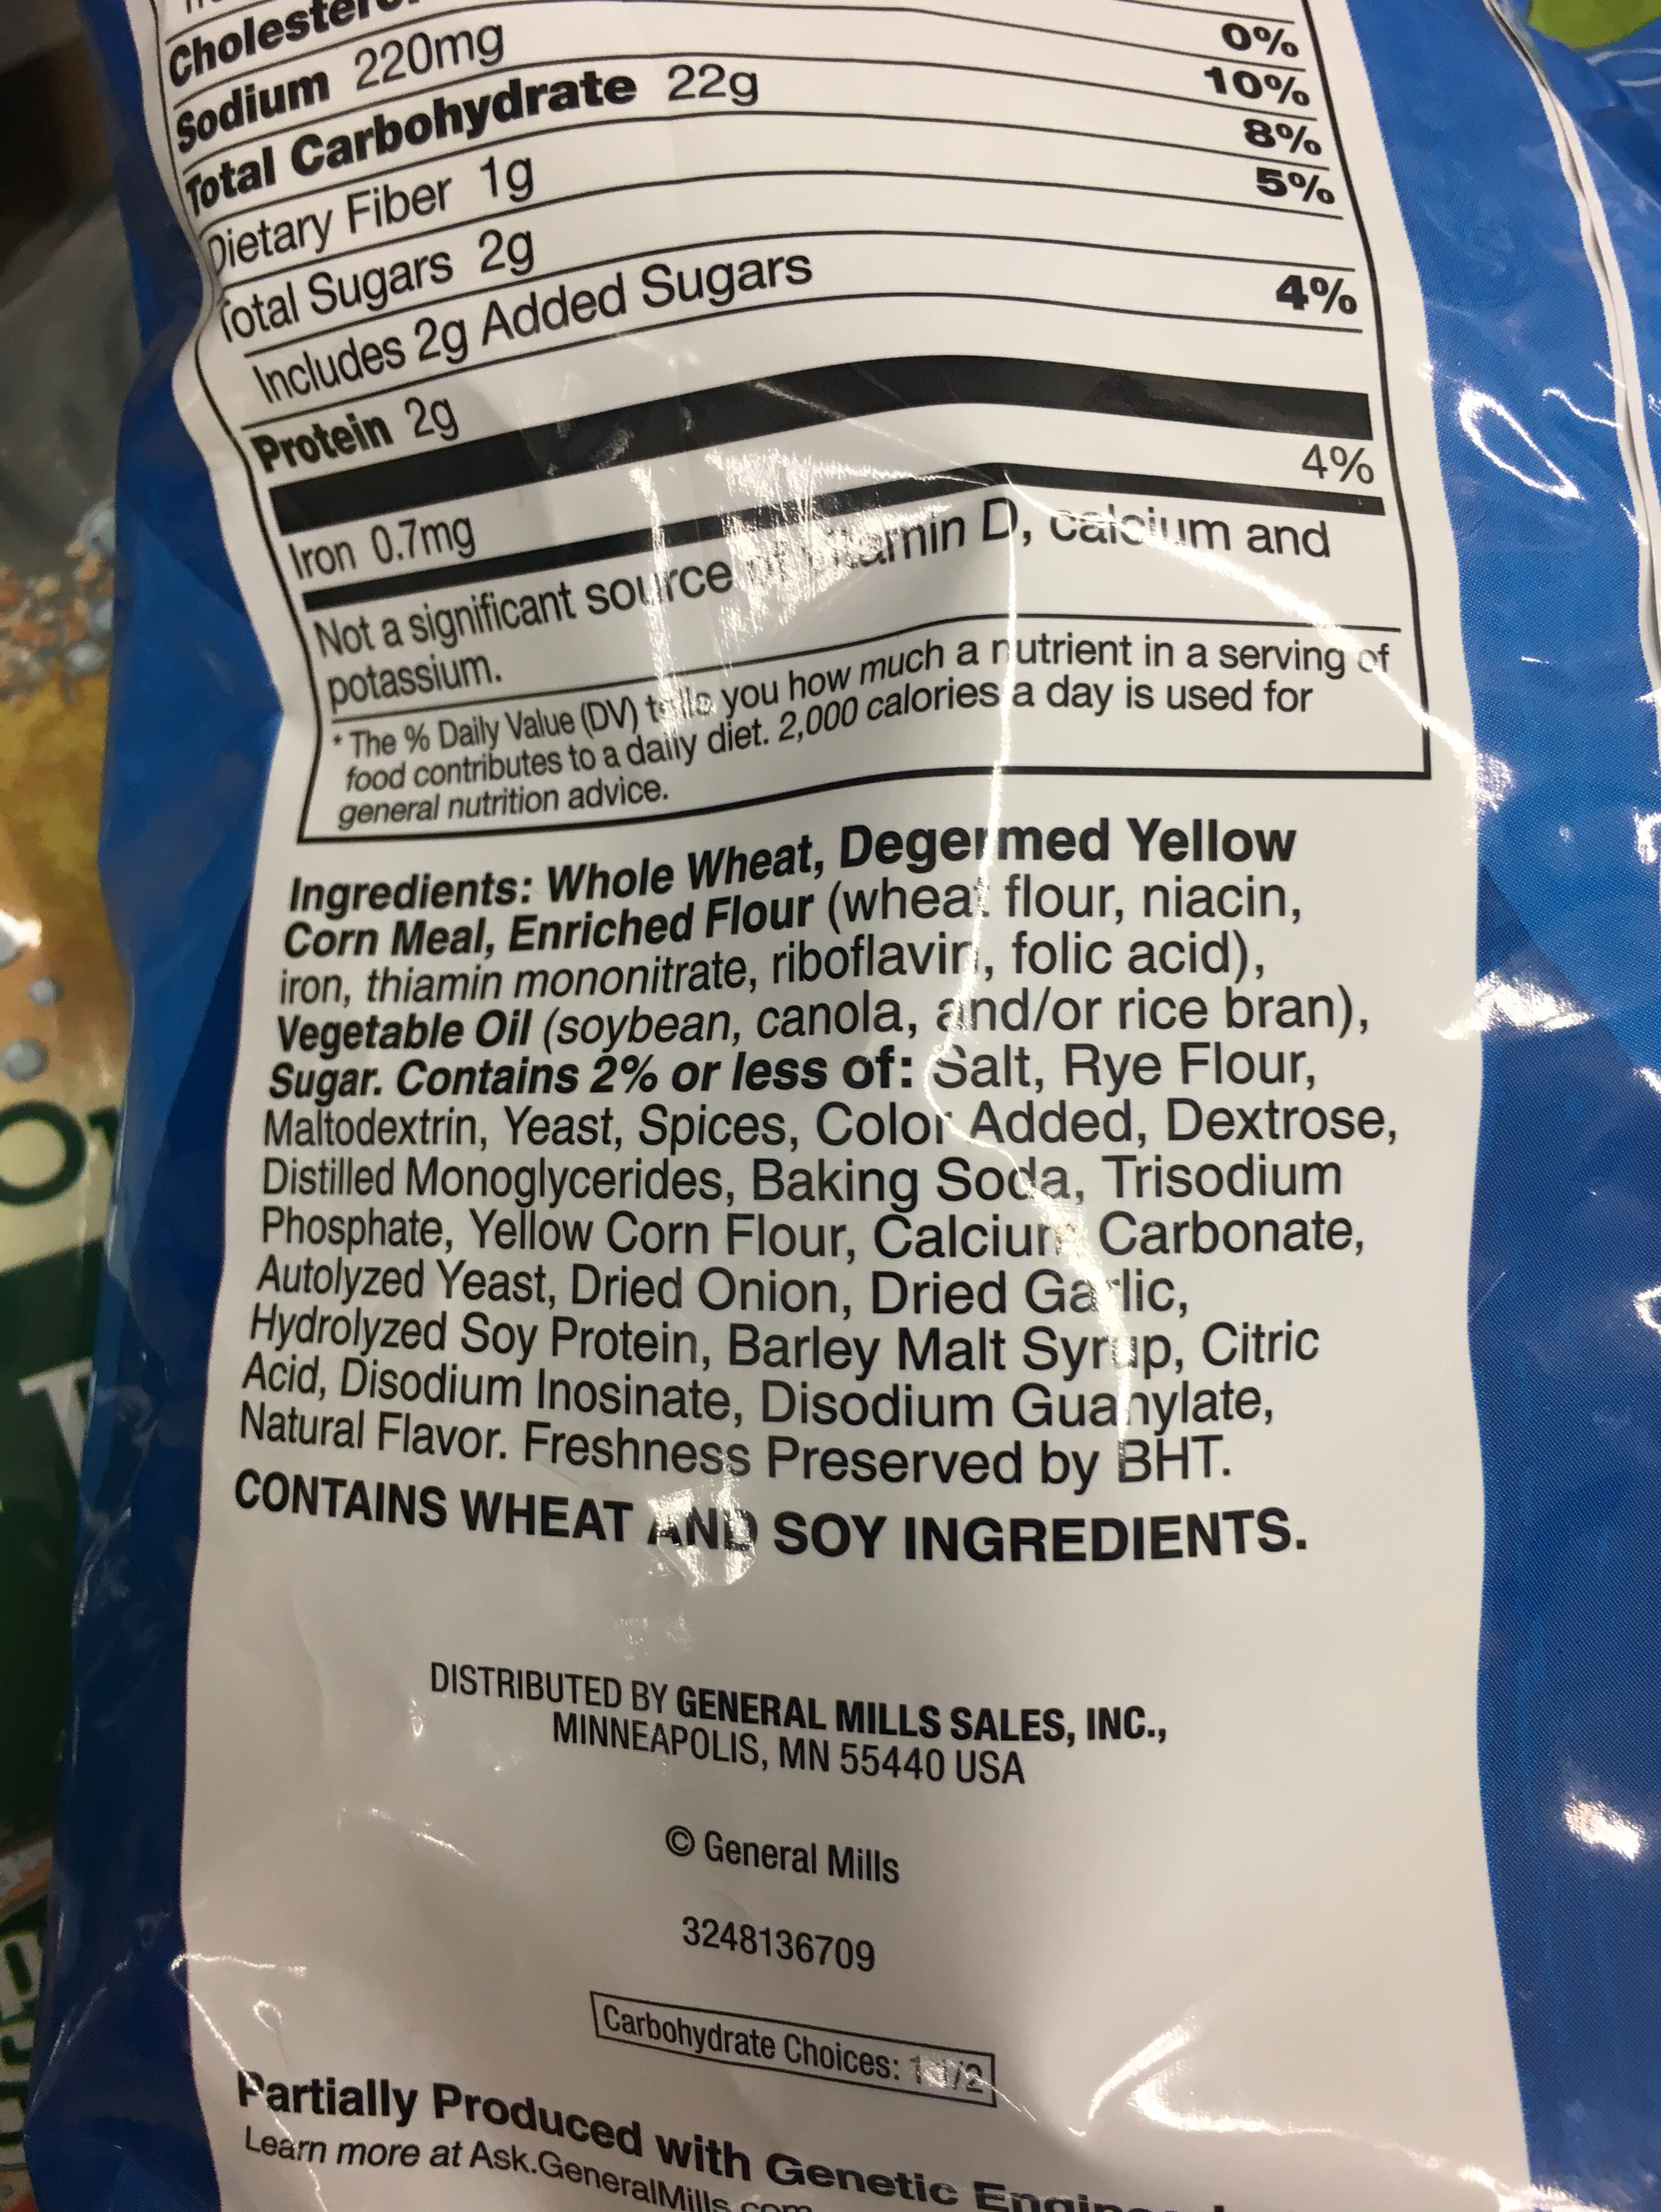 Chex mix snack mix - Ingredients